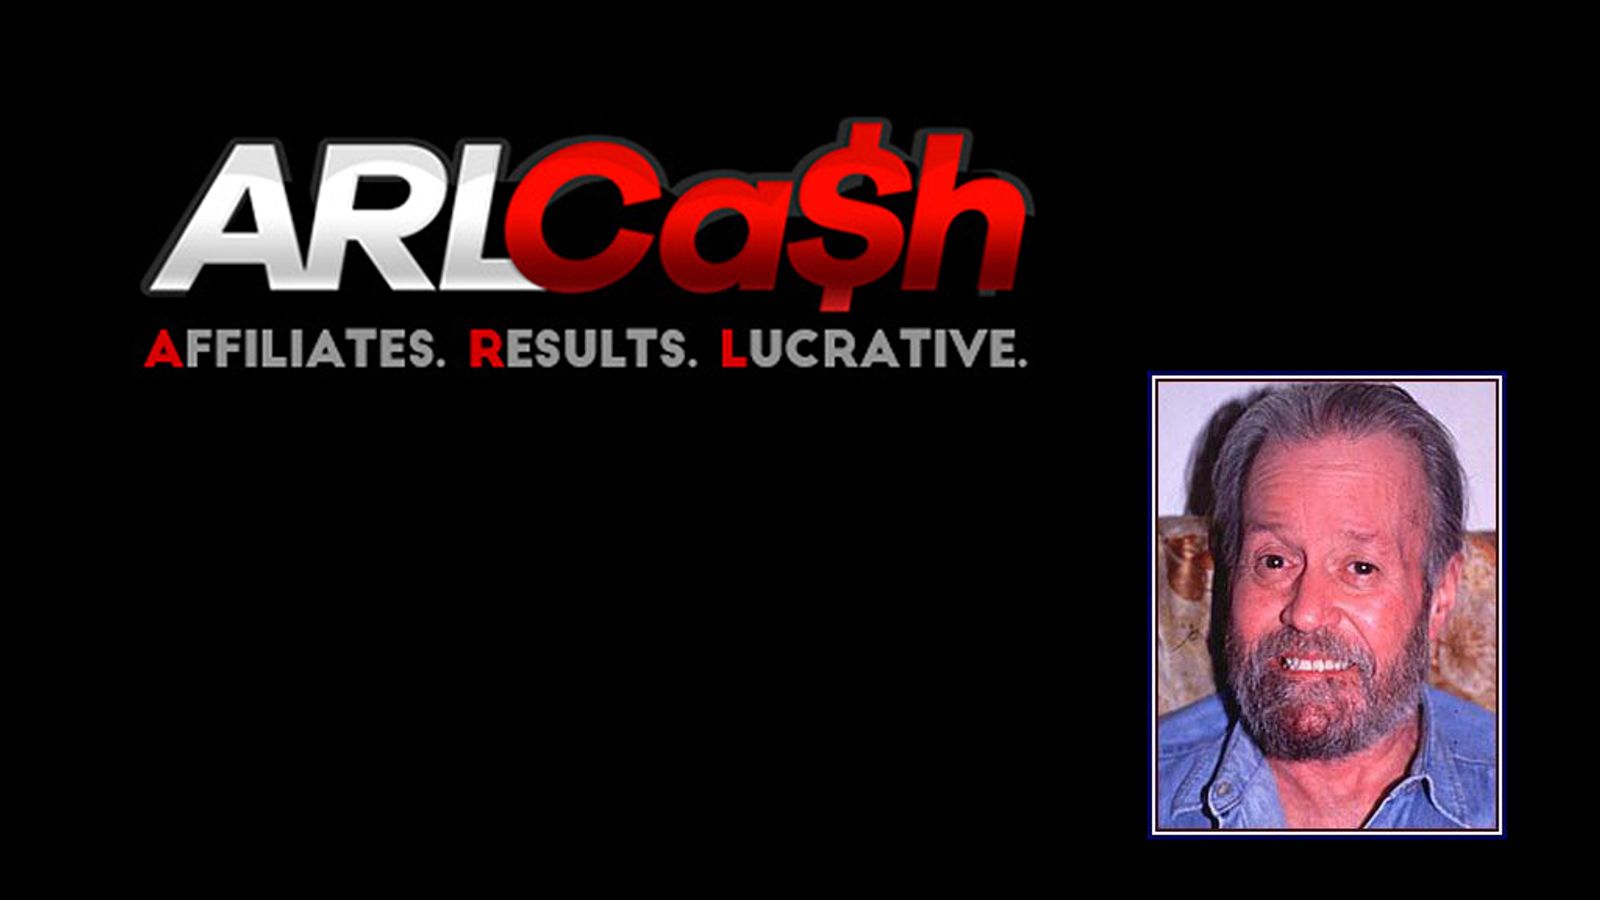 ARL Cash To Make Bruce Seven Films Available Online